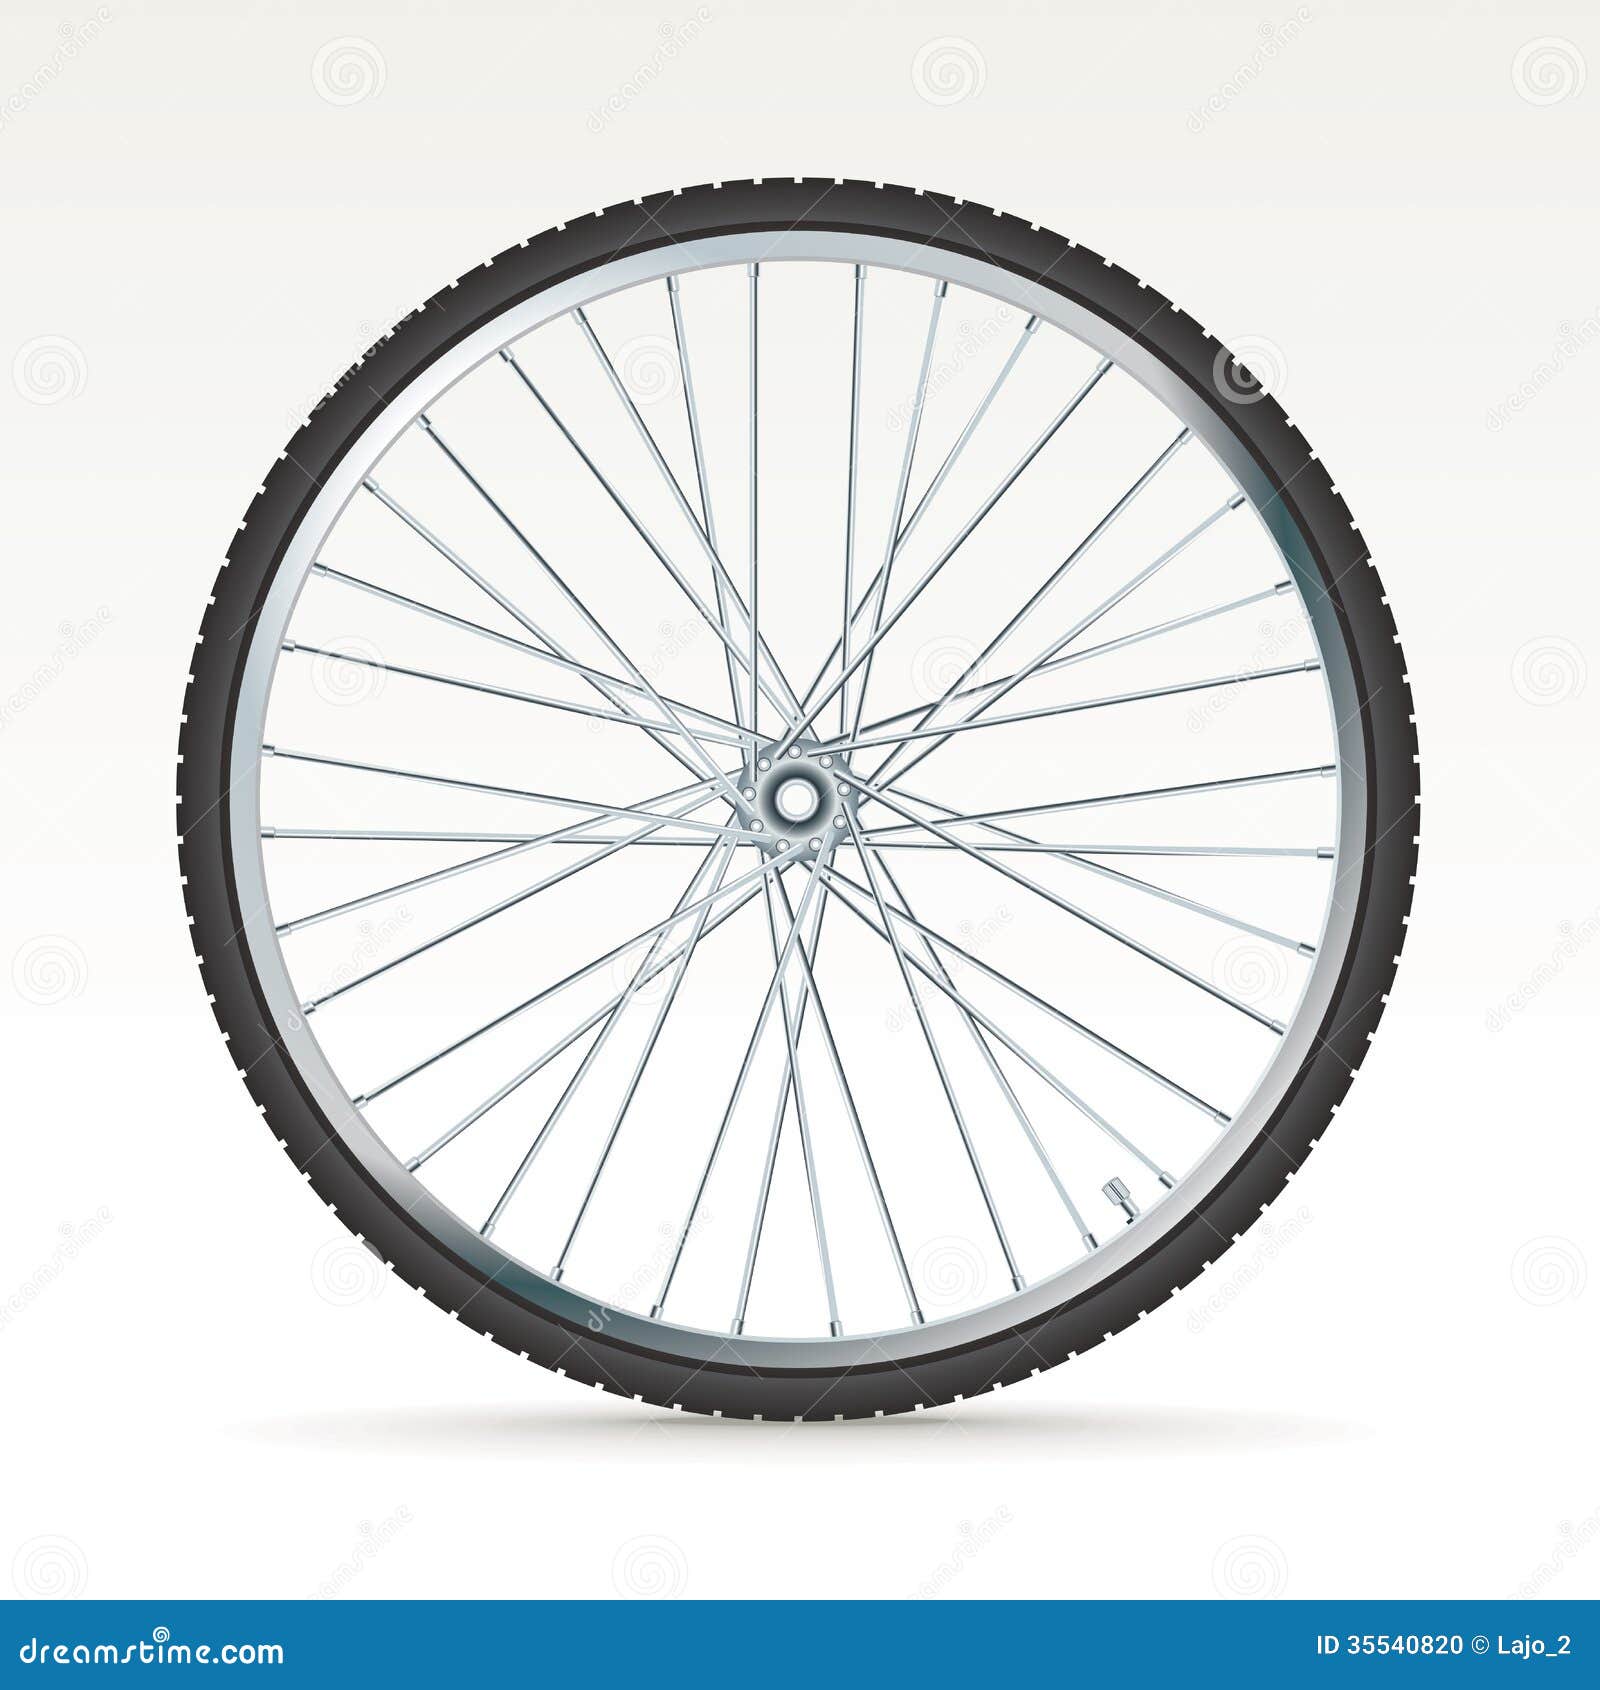 clipart bike wheel - photo #39